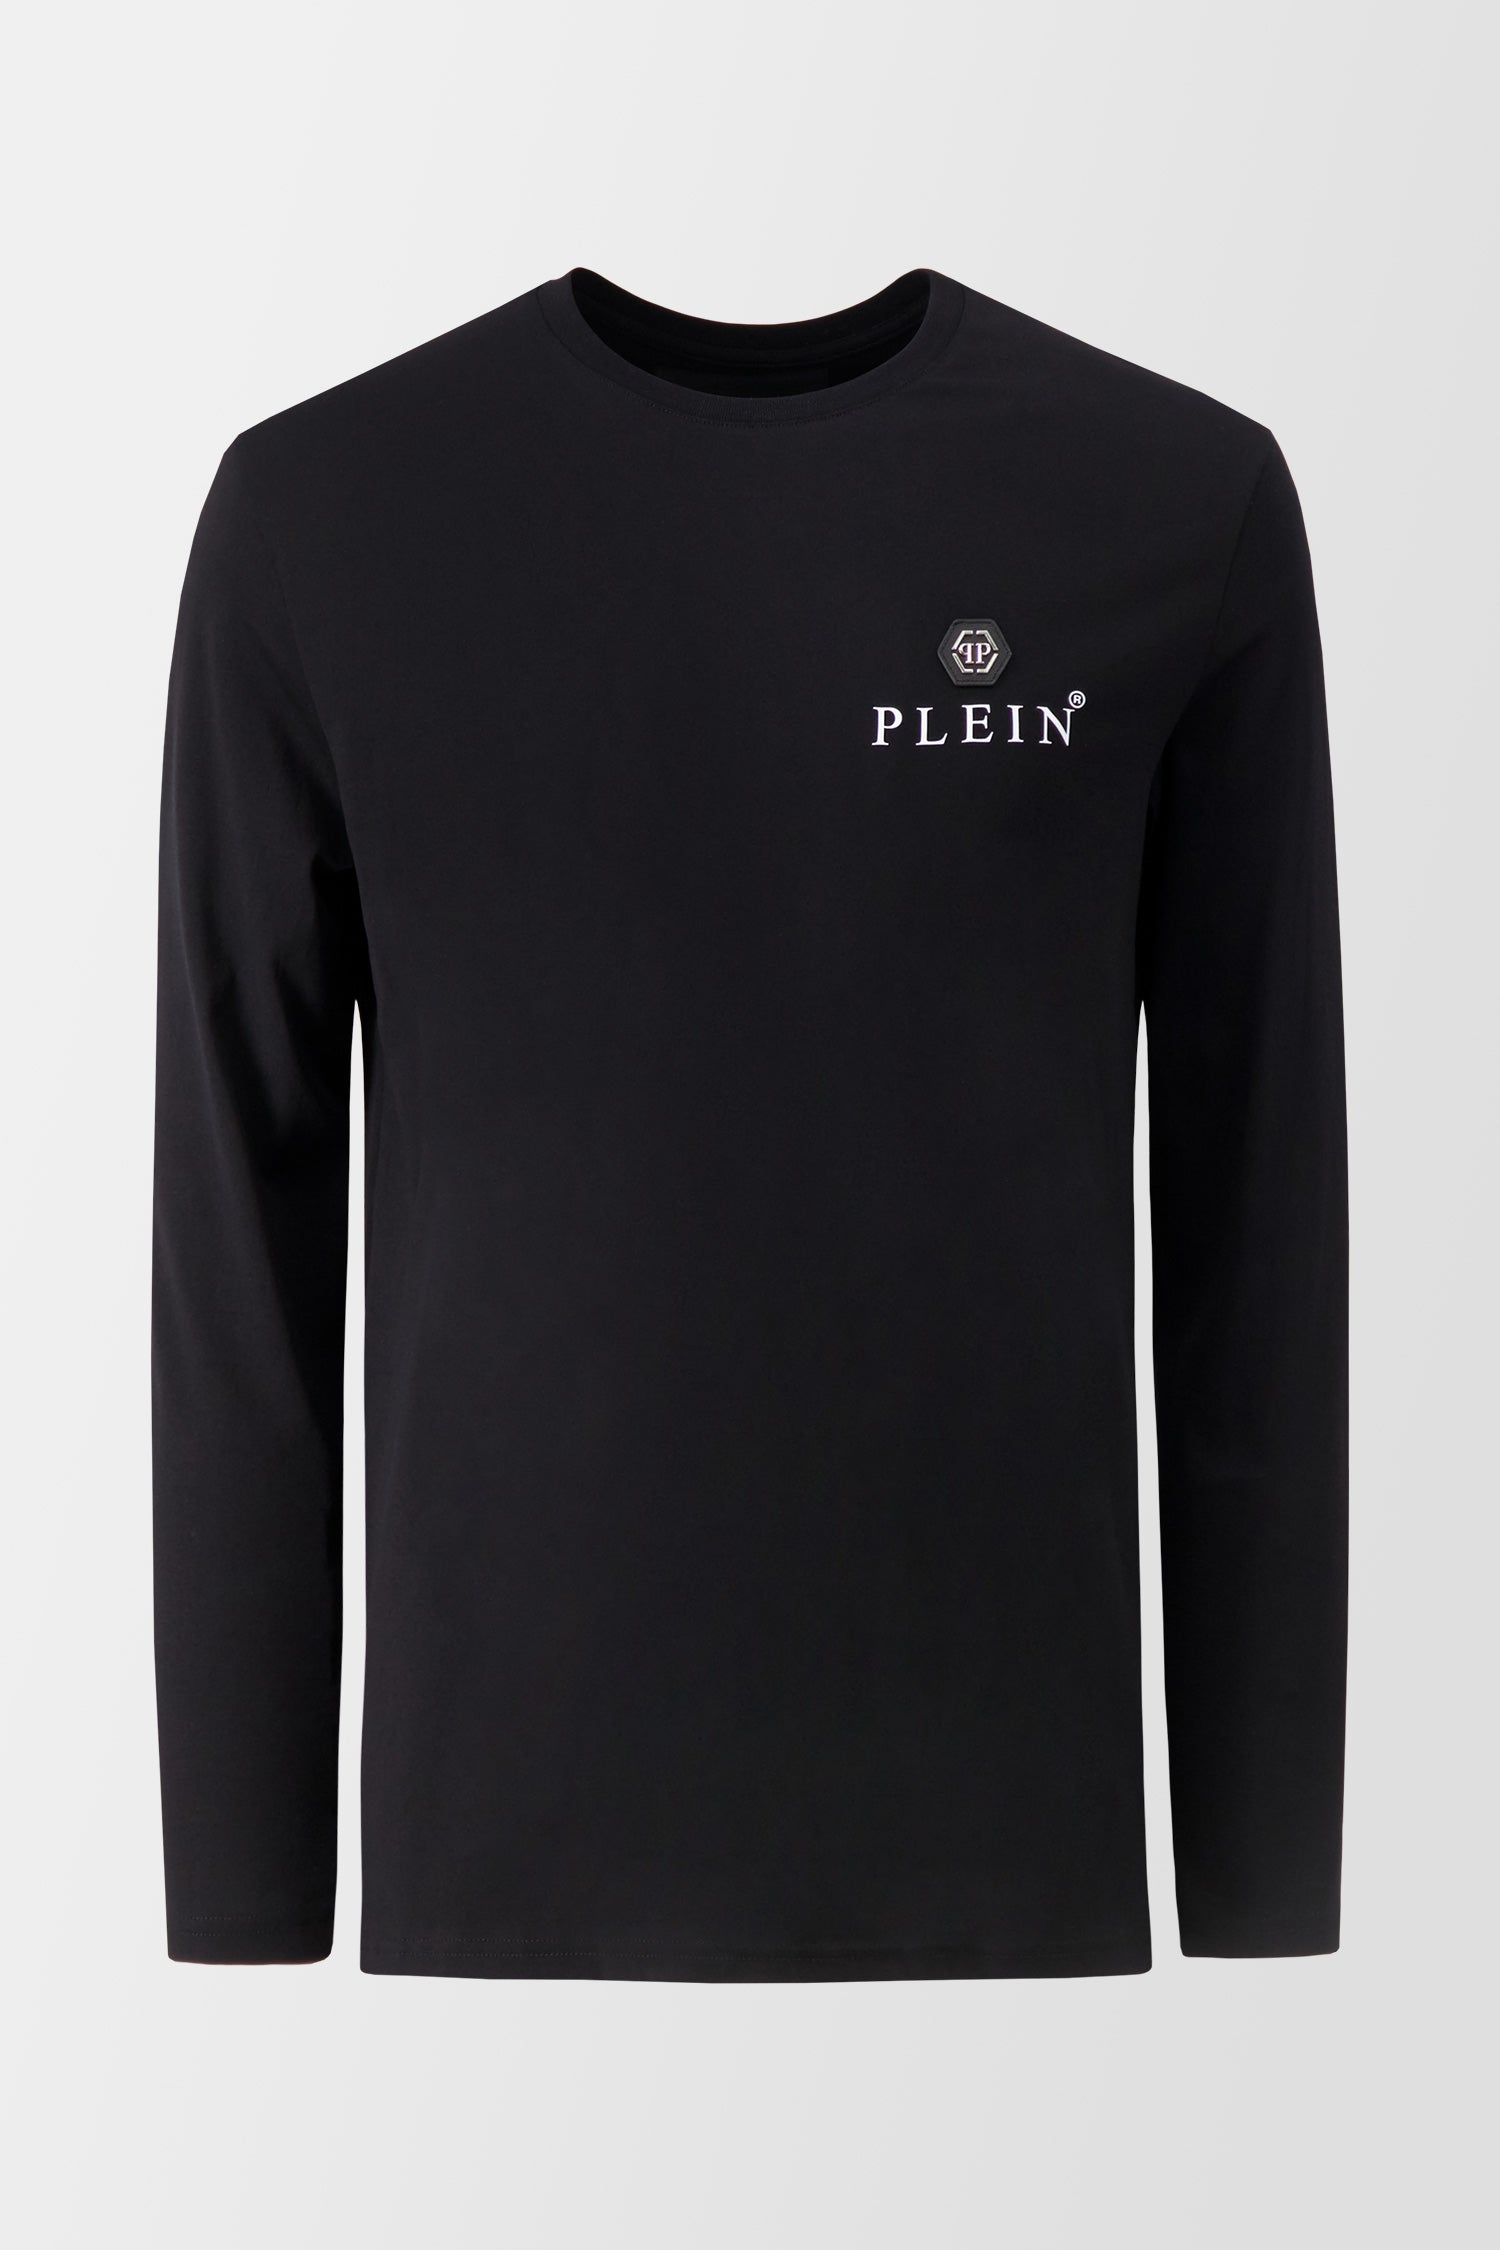 Philipp Plein Iconic Plein Black Long Sleeve